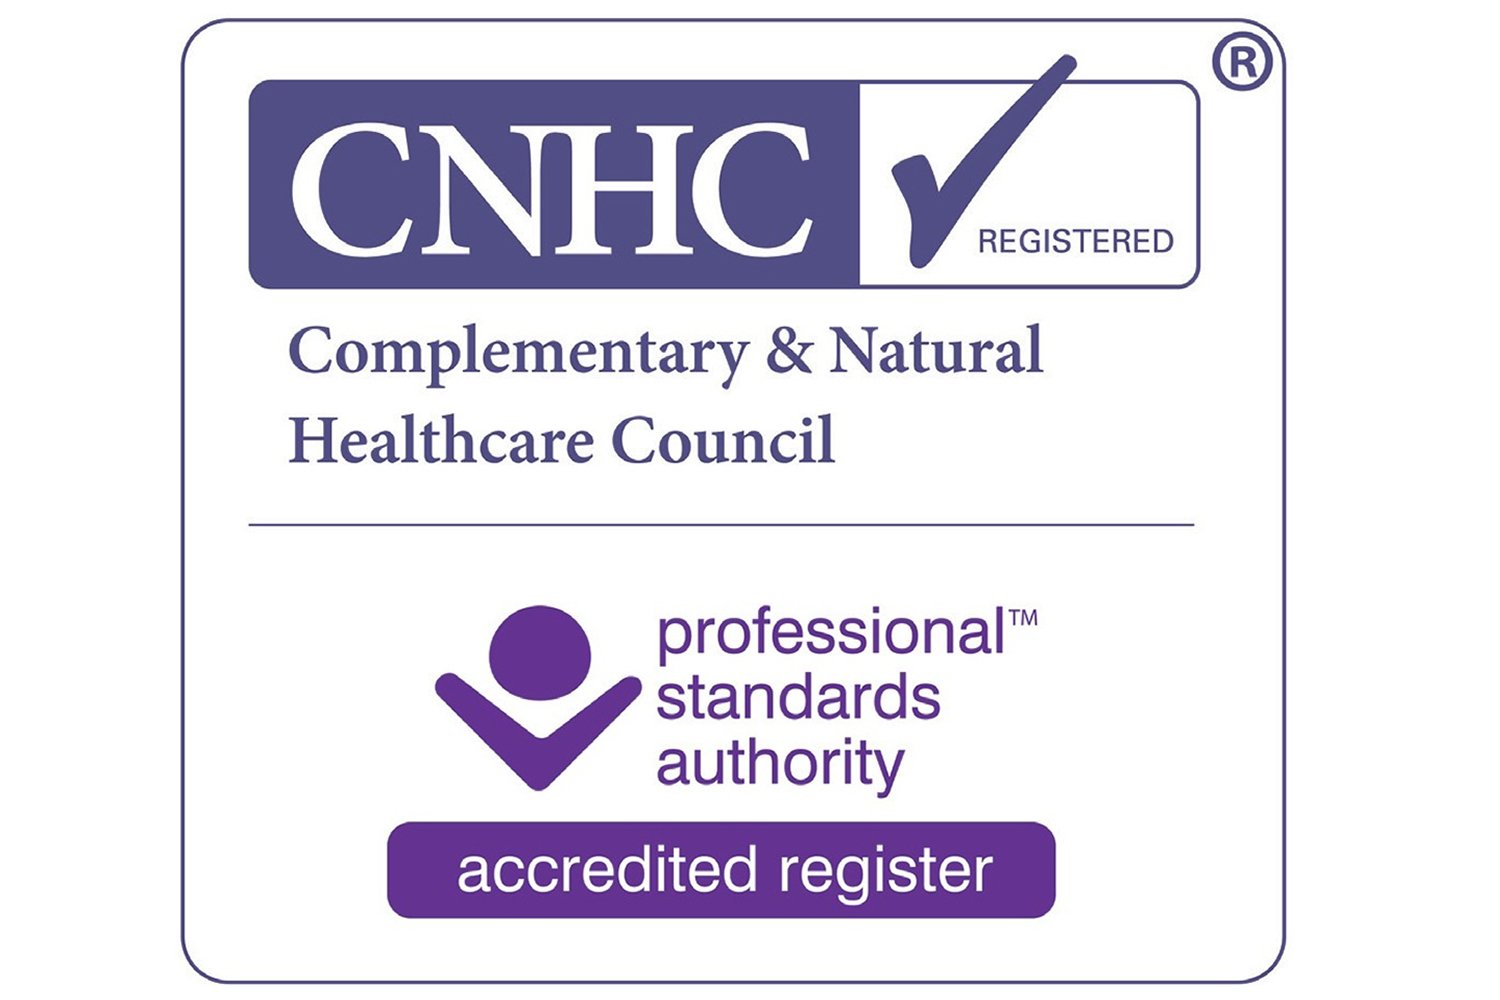 Dr Miguel Toribio-Mateas CNHC Registration Nutritional Therapy copy.jpg (Copy) (Copy)